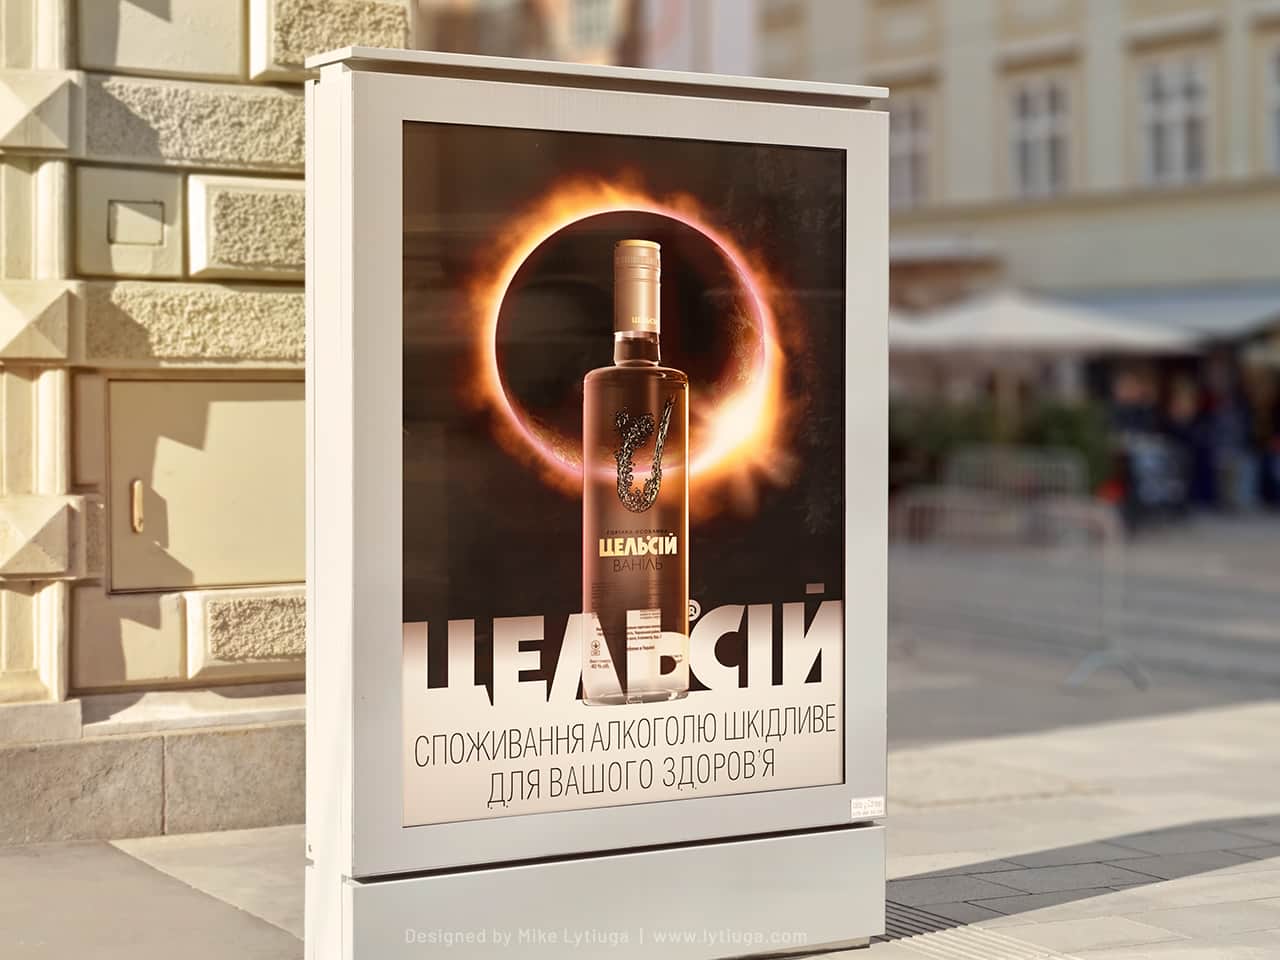 Celsiy flavored vodka outdor advertising campaign